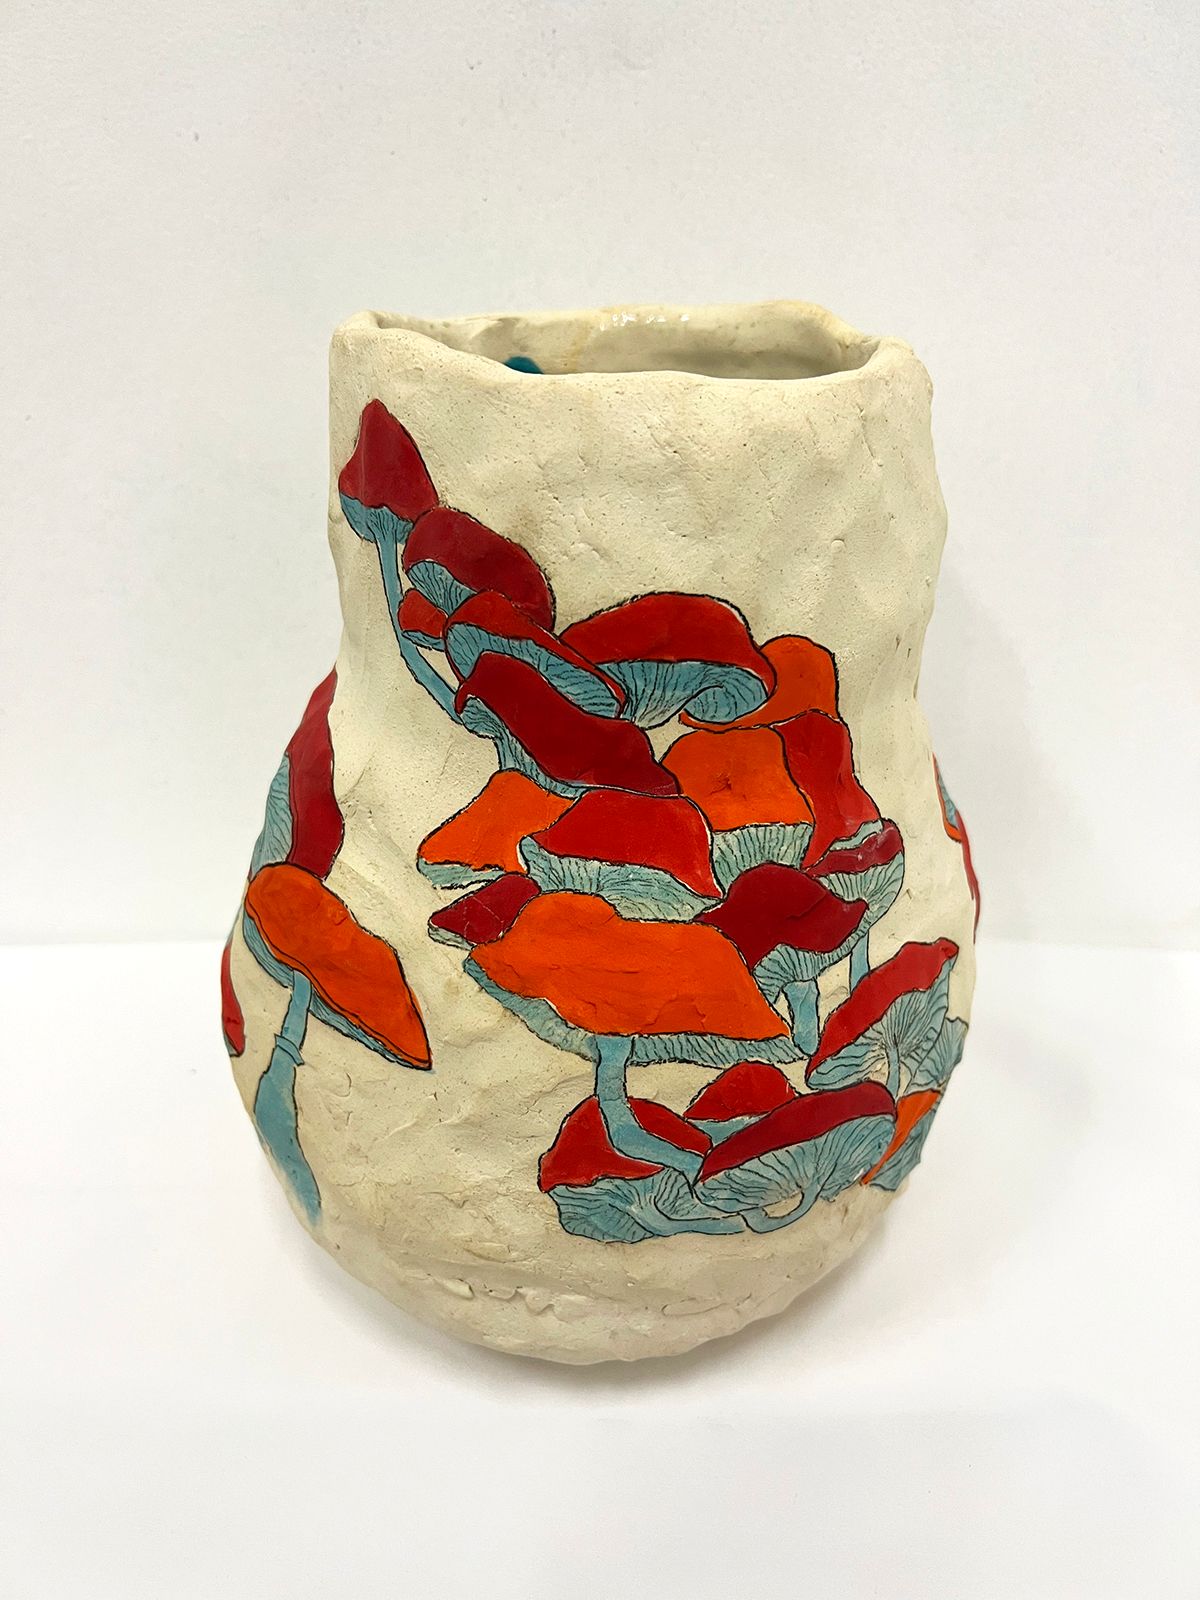 Emily Marchand, "foraging vase"